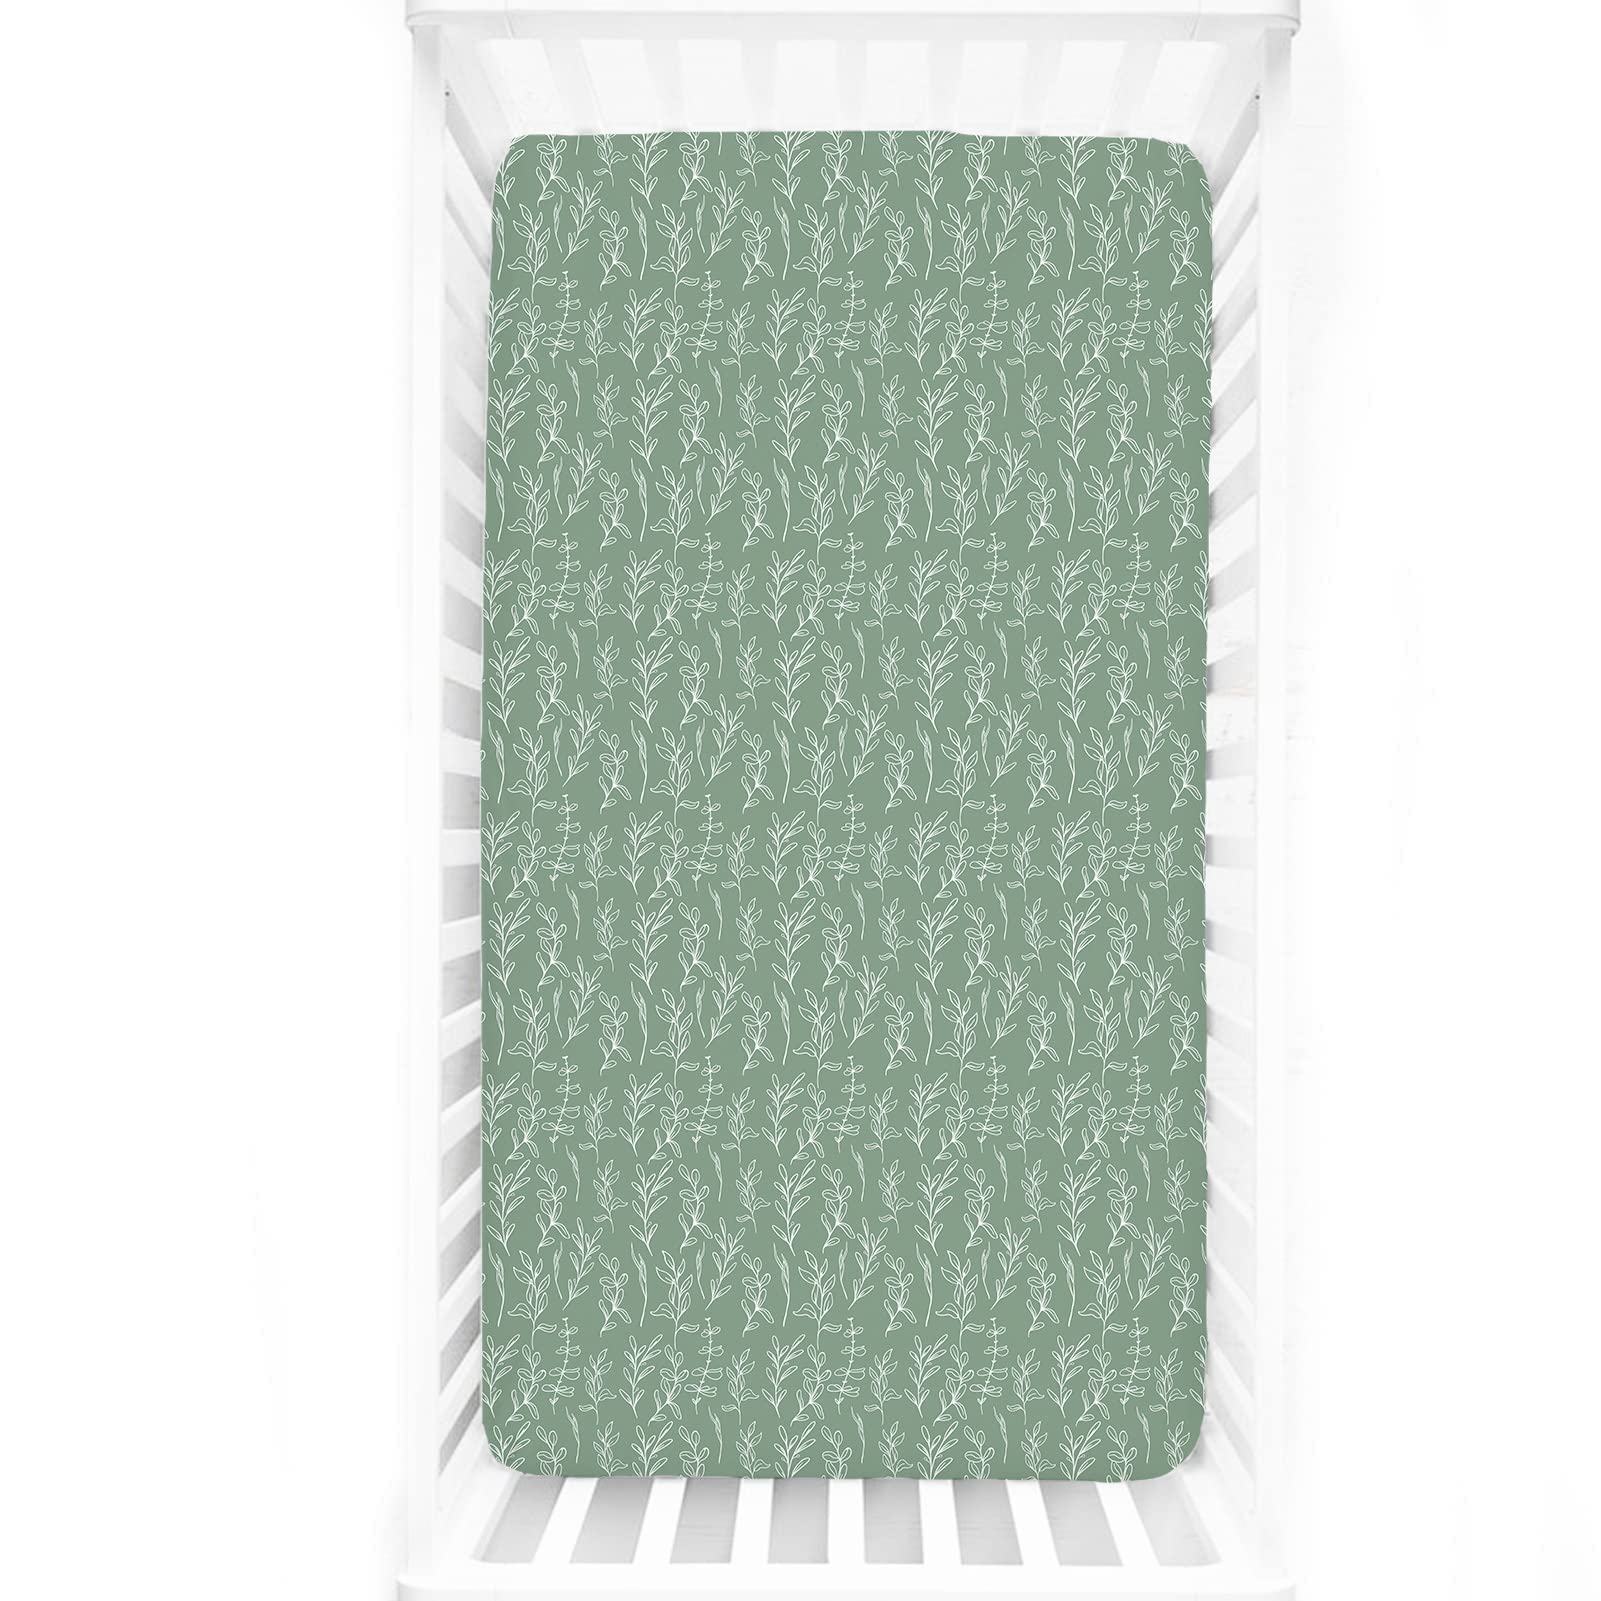 HNHUAMING Green Sage Nursing Pillow Cover, Baby Diaper Changing Pad Cover Cradle Mattress Sheets,Crib Sheet